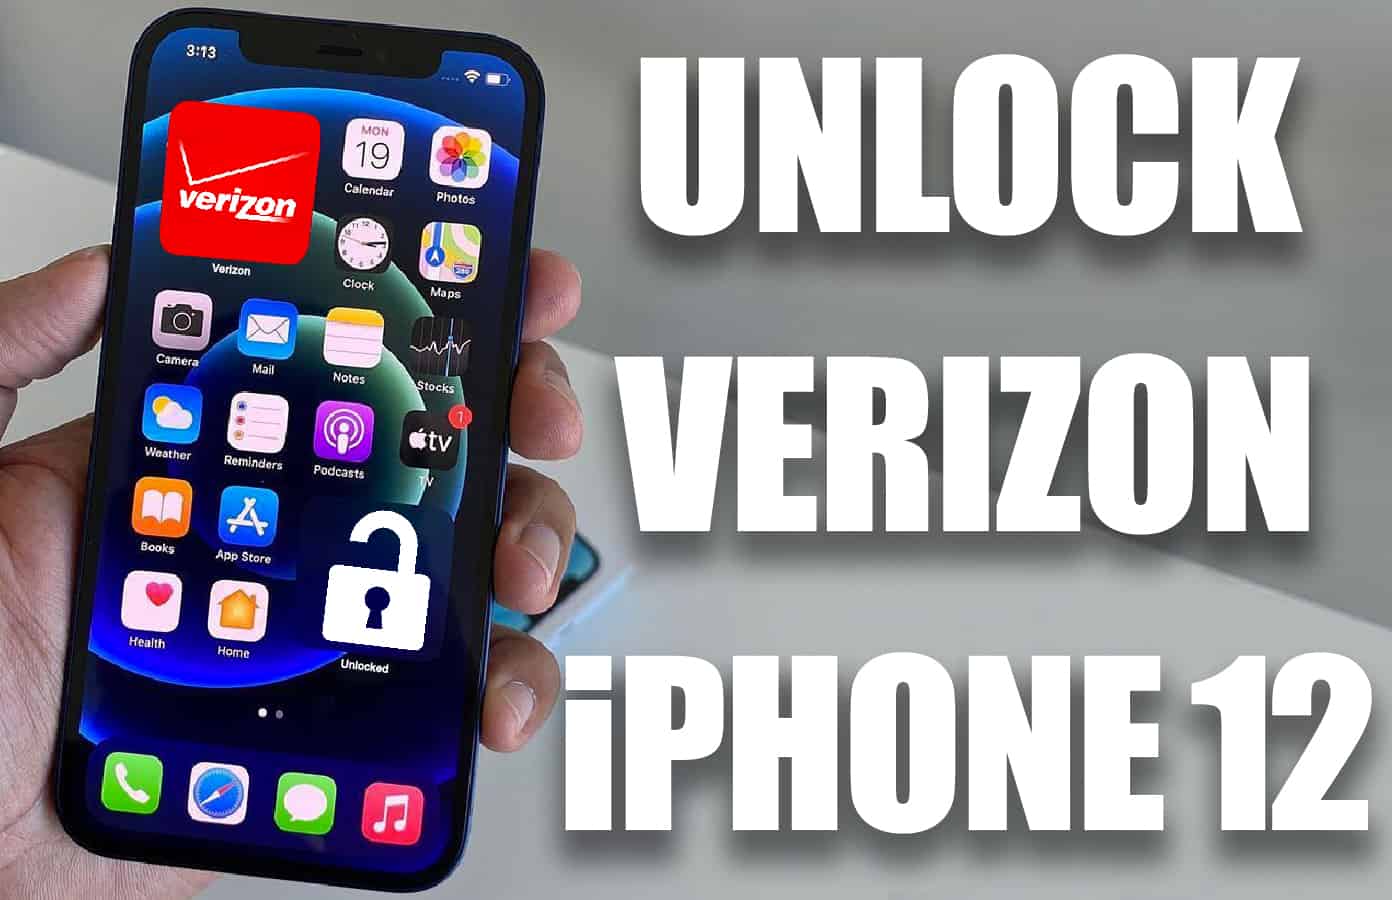 unlock verizon iphone 12